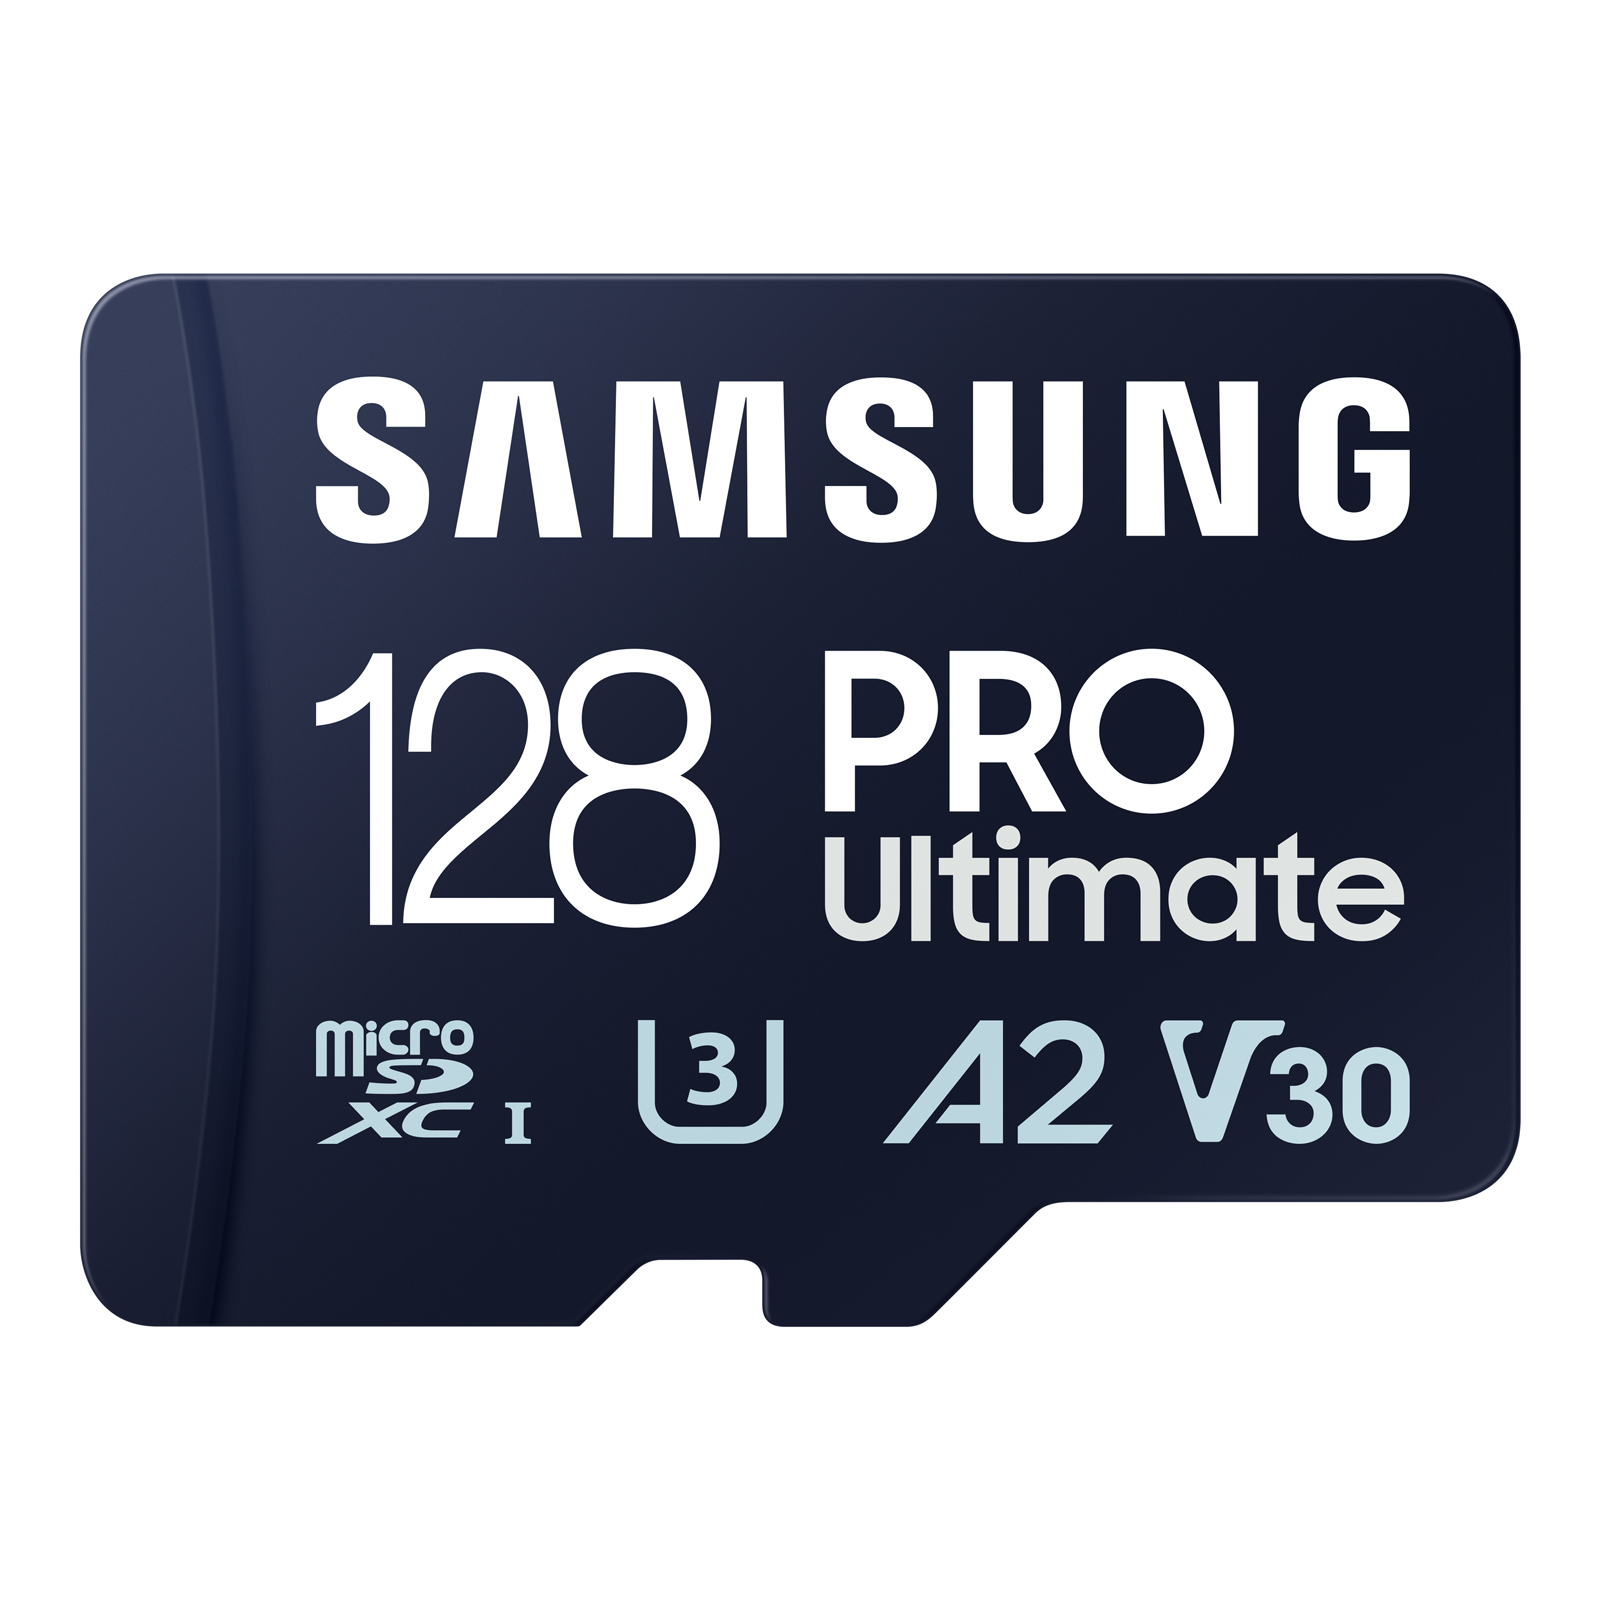 Samsung microSD PRO Ultimate  (128GB)